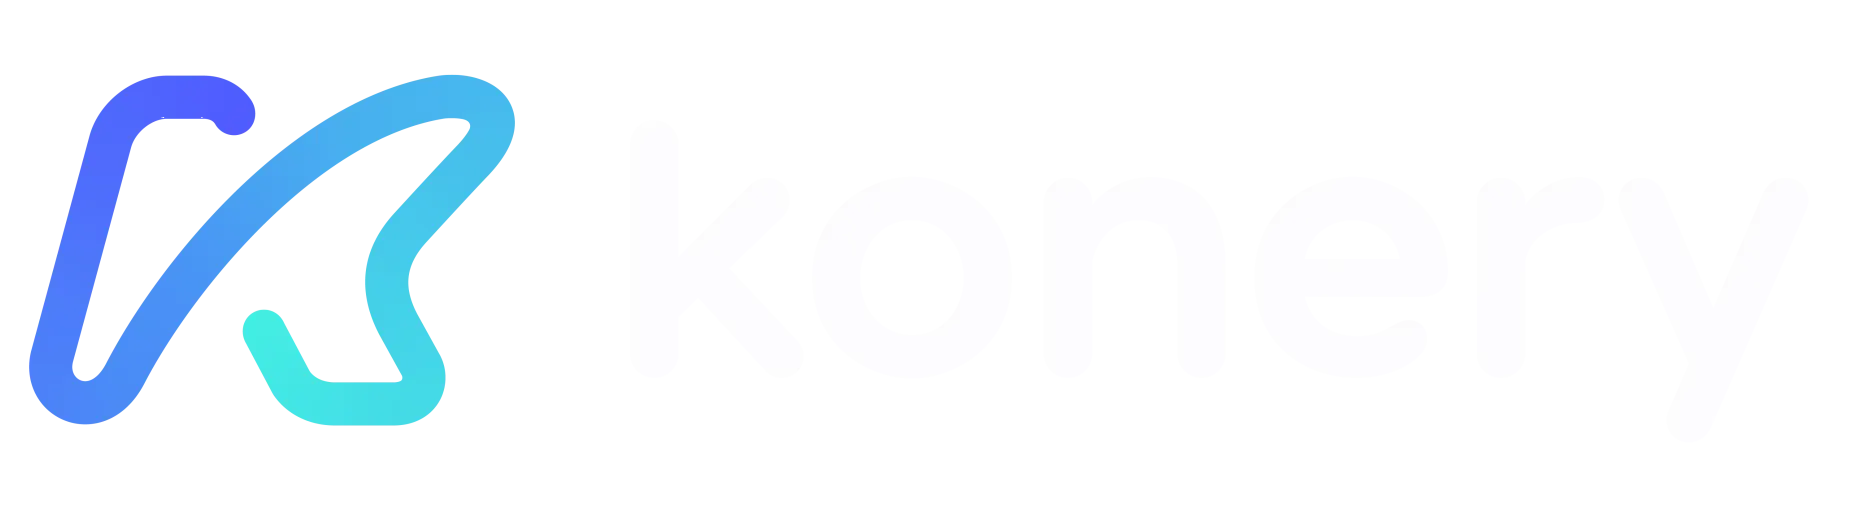 konery-logo-home-white